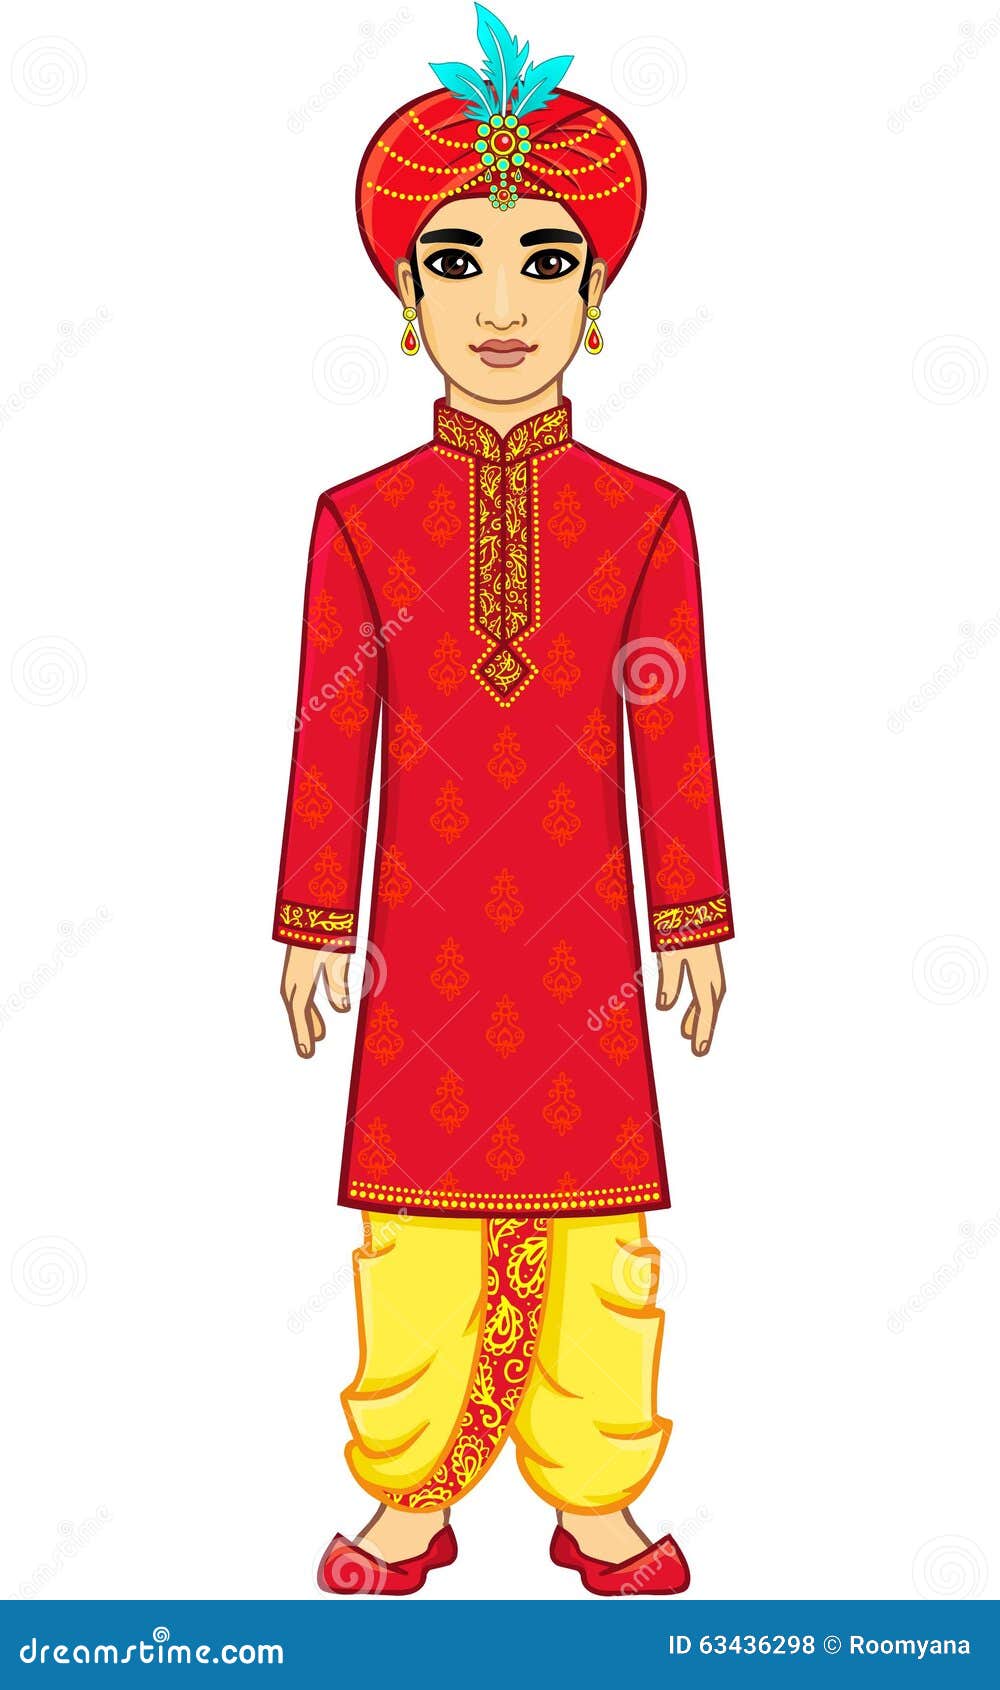 Animation Indian man. stock vector. Illustration of ...